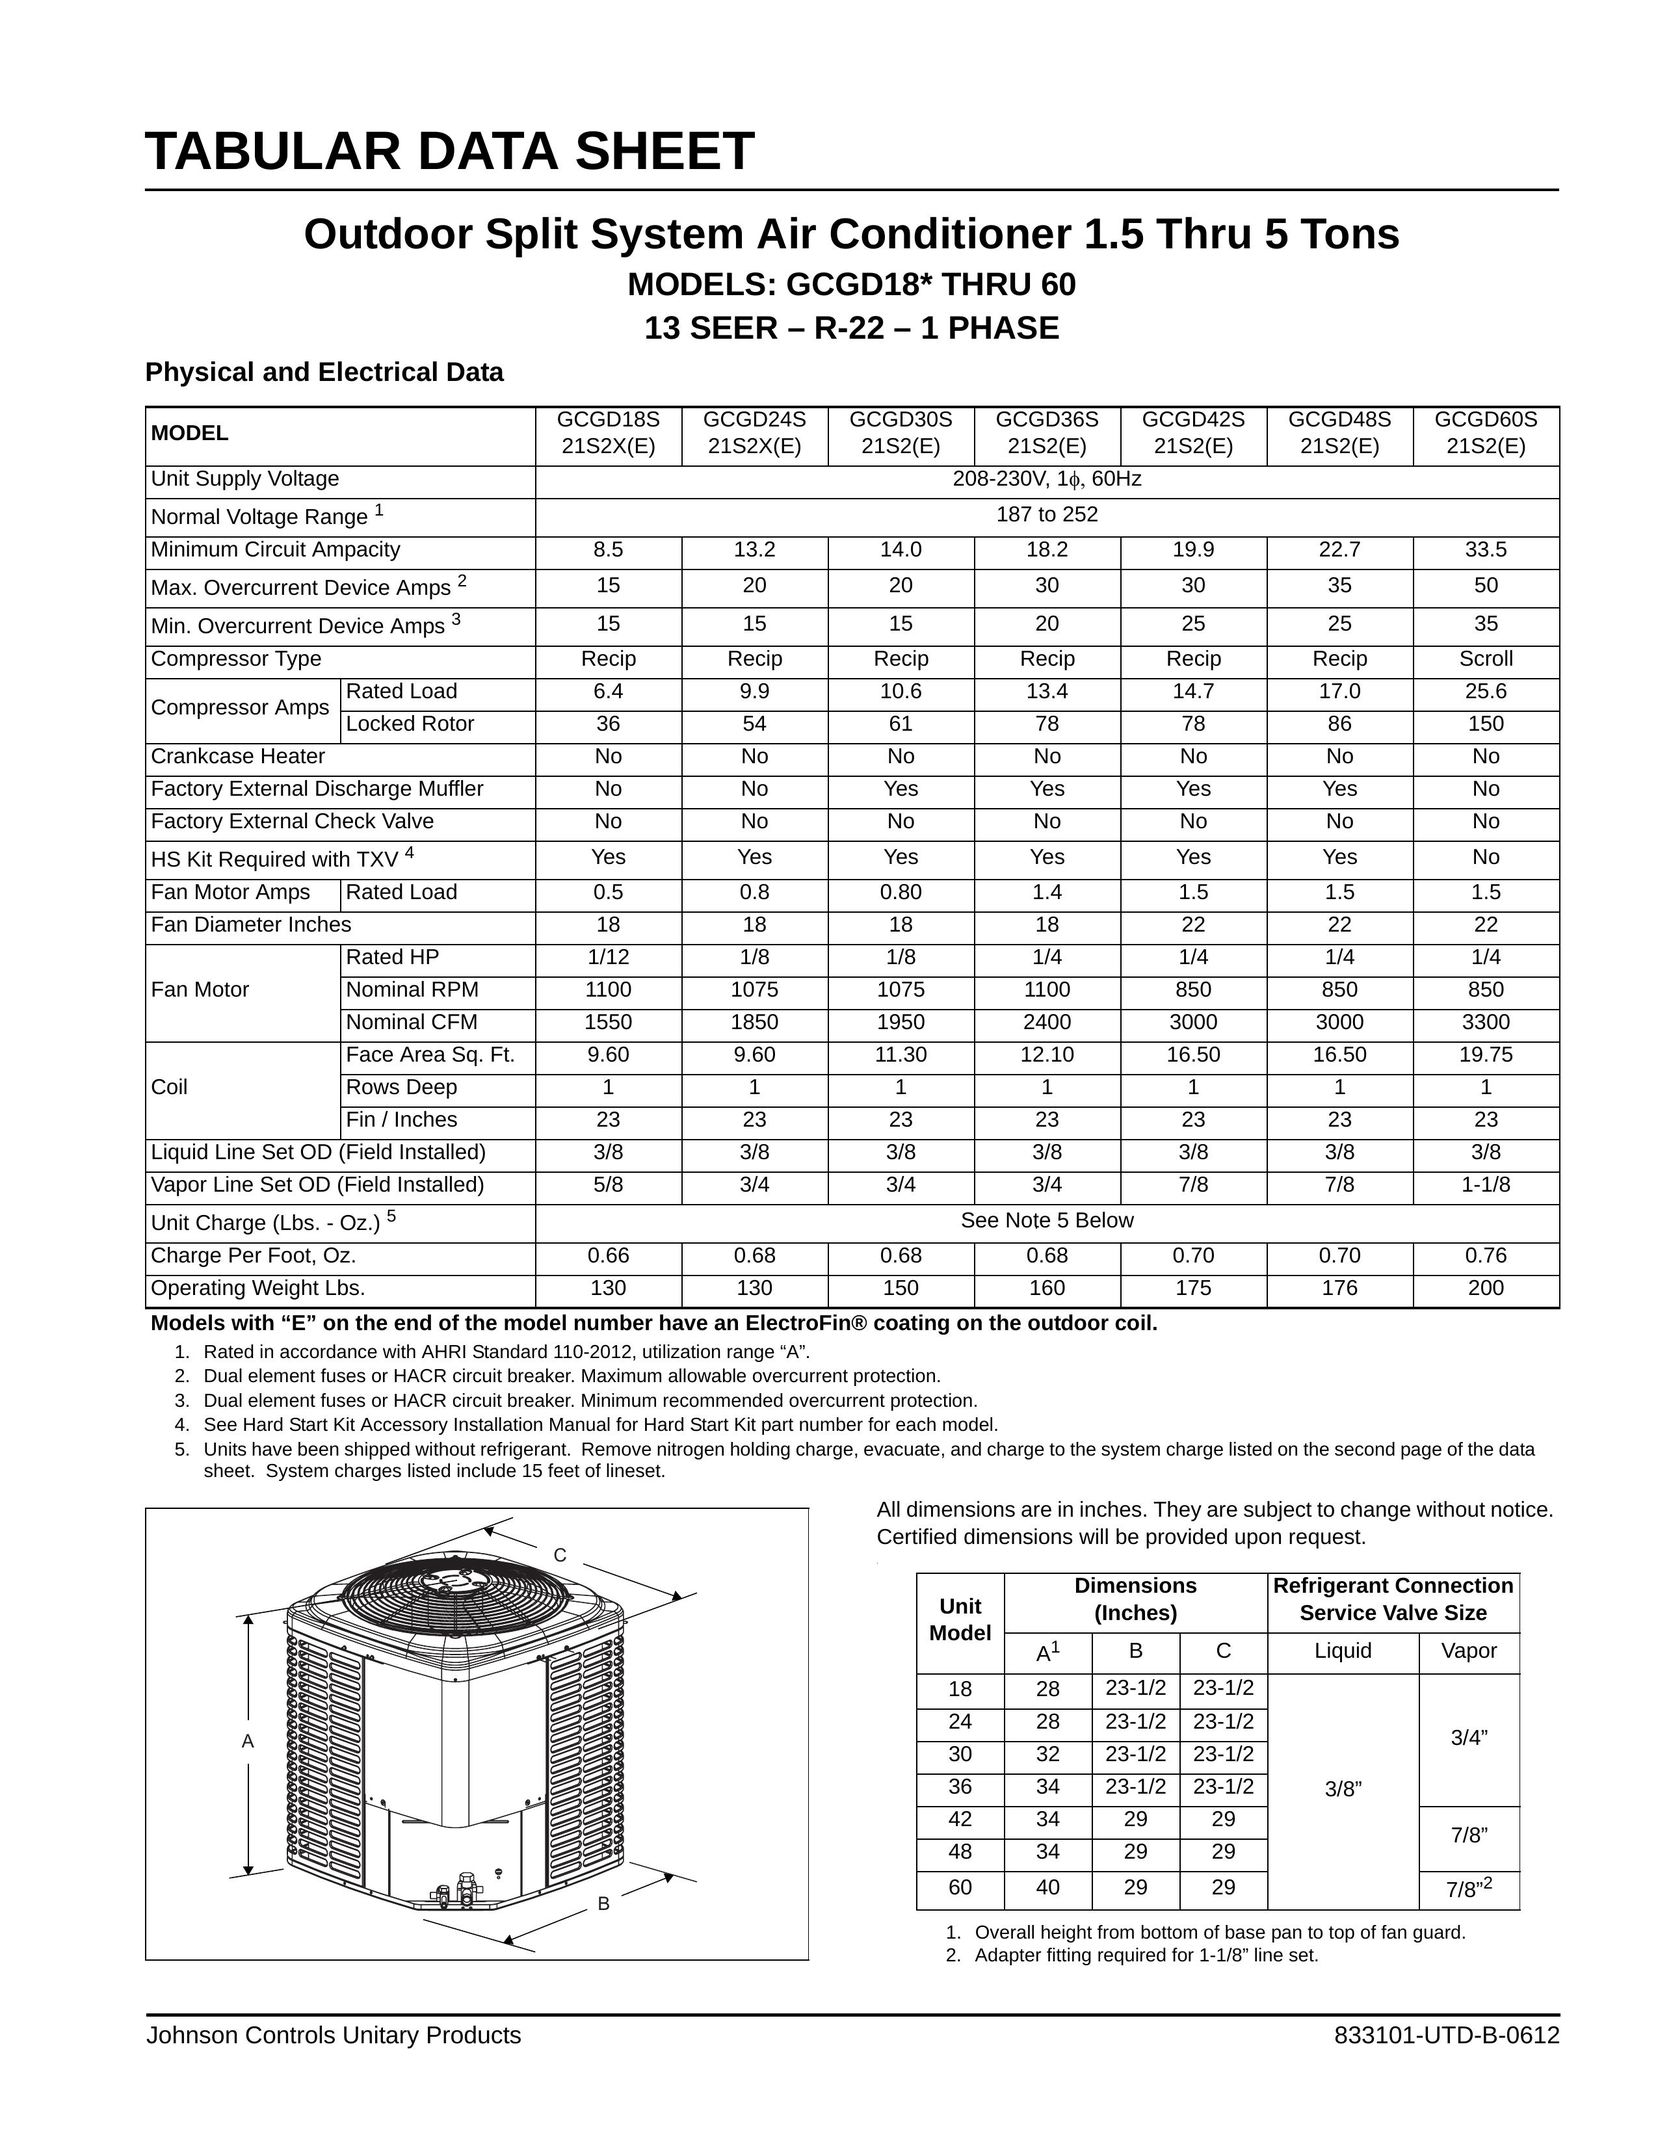 Johnson Controls GCGD18 thru 60 Air Conditioner User Manual